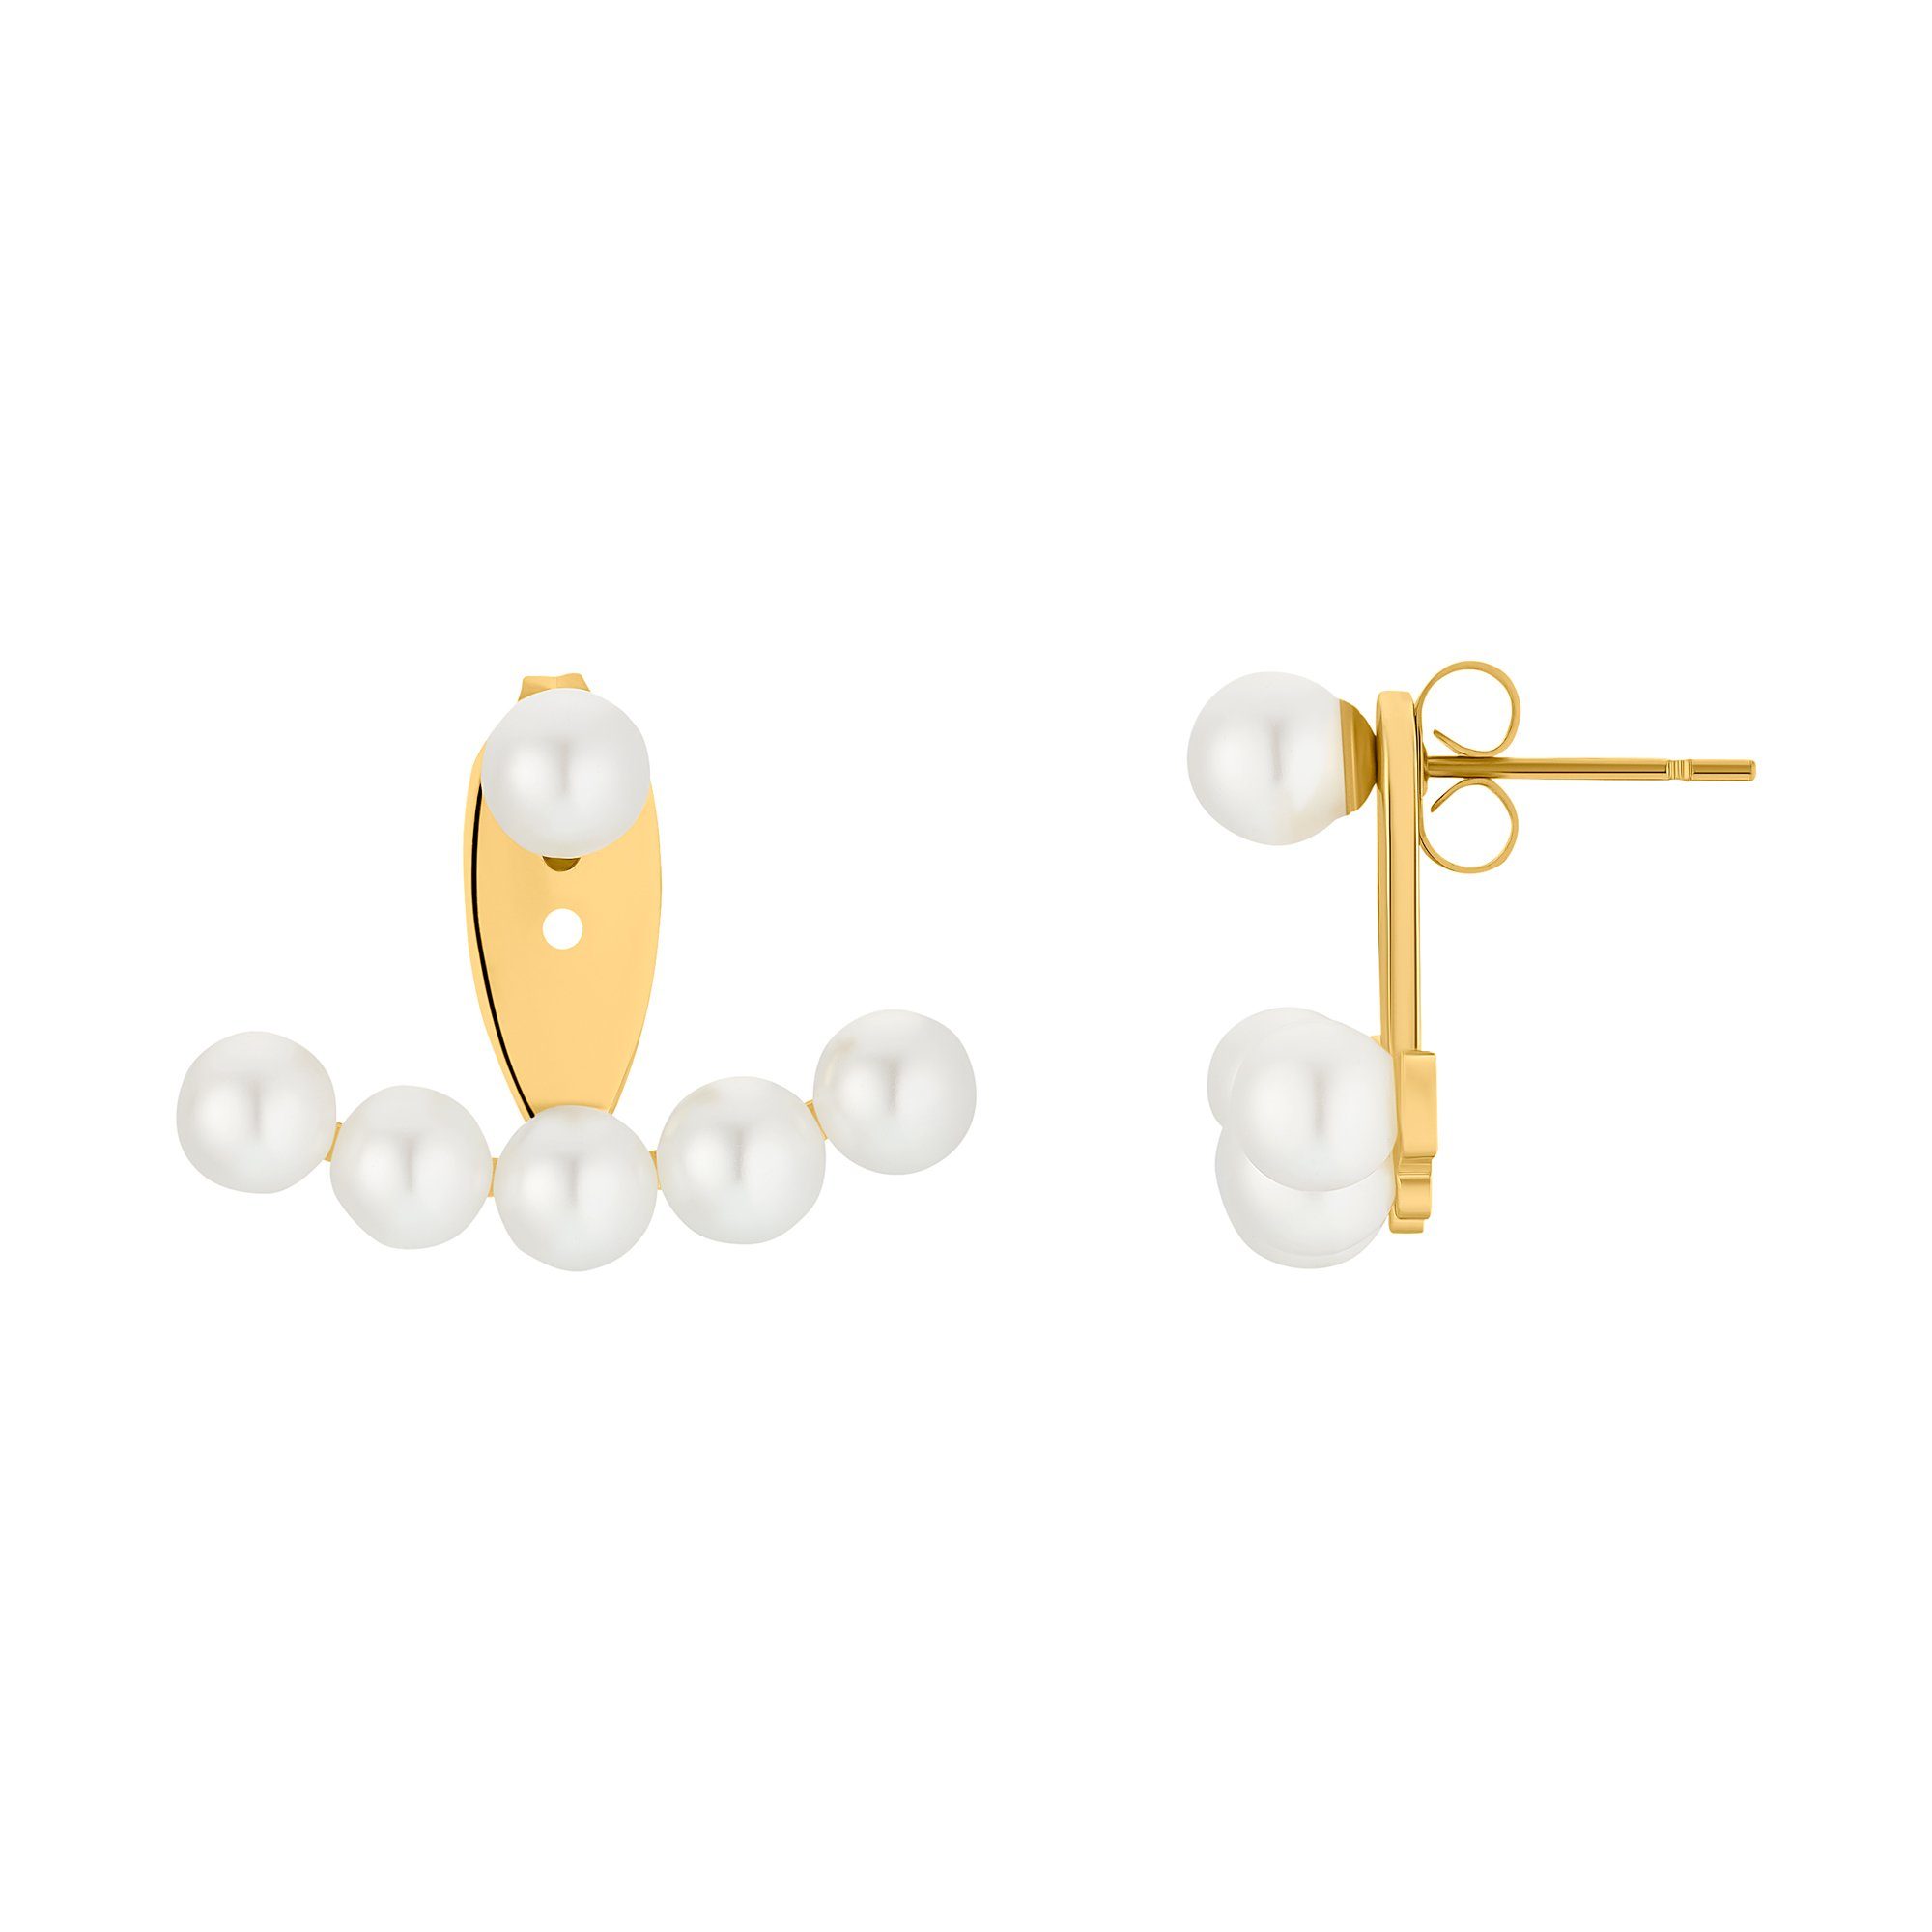 Heideman Paar Ohrstecker mit Perlen Frida silberfarben poliert Ohrringe (Ohrringe, inkl. goldfarben Geschenkverpackung)